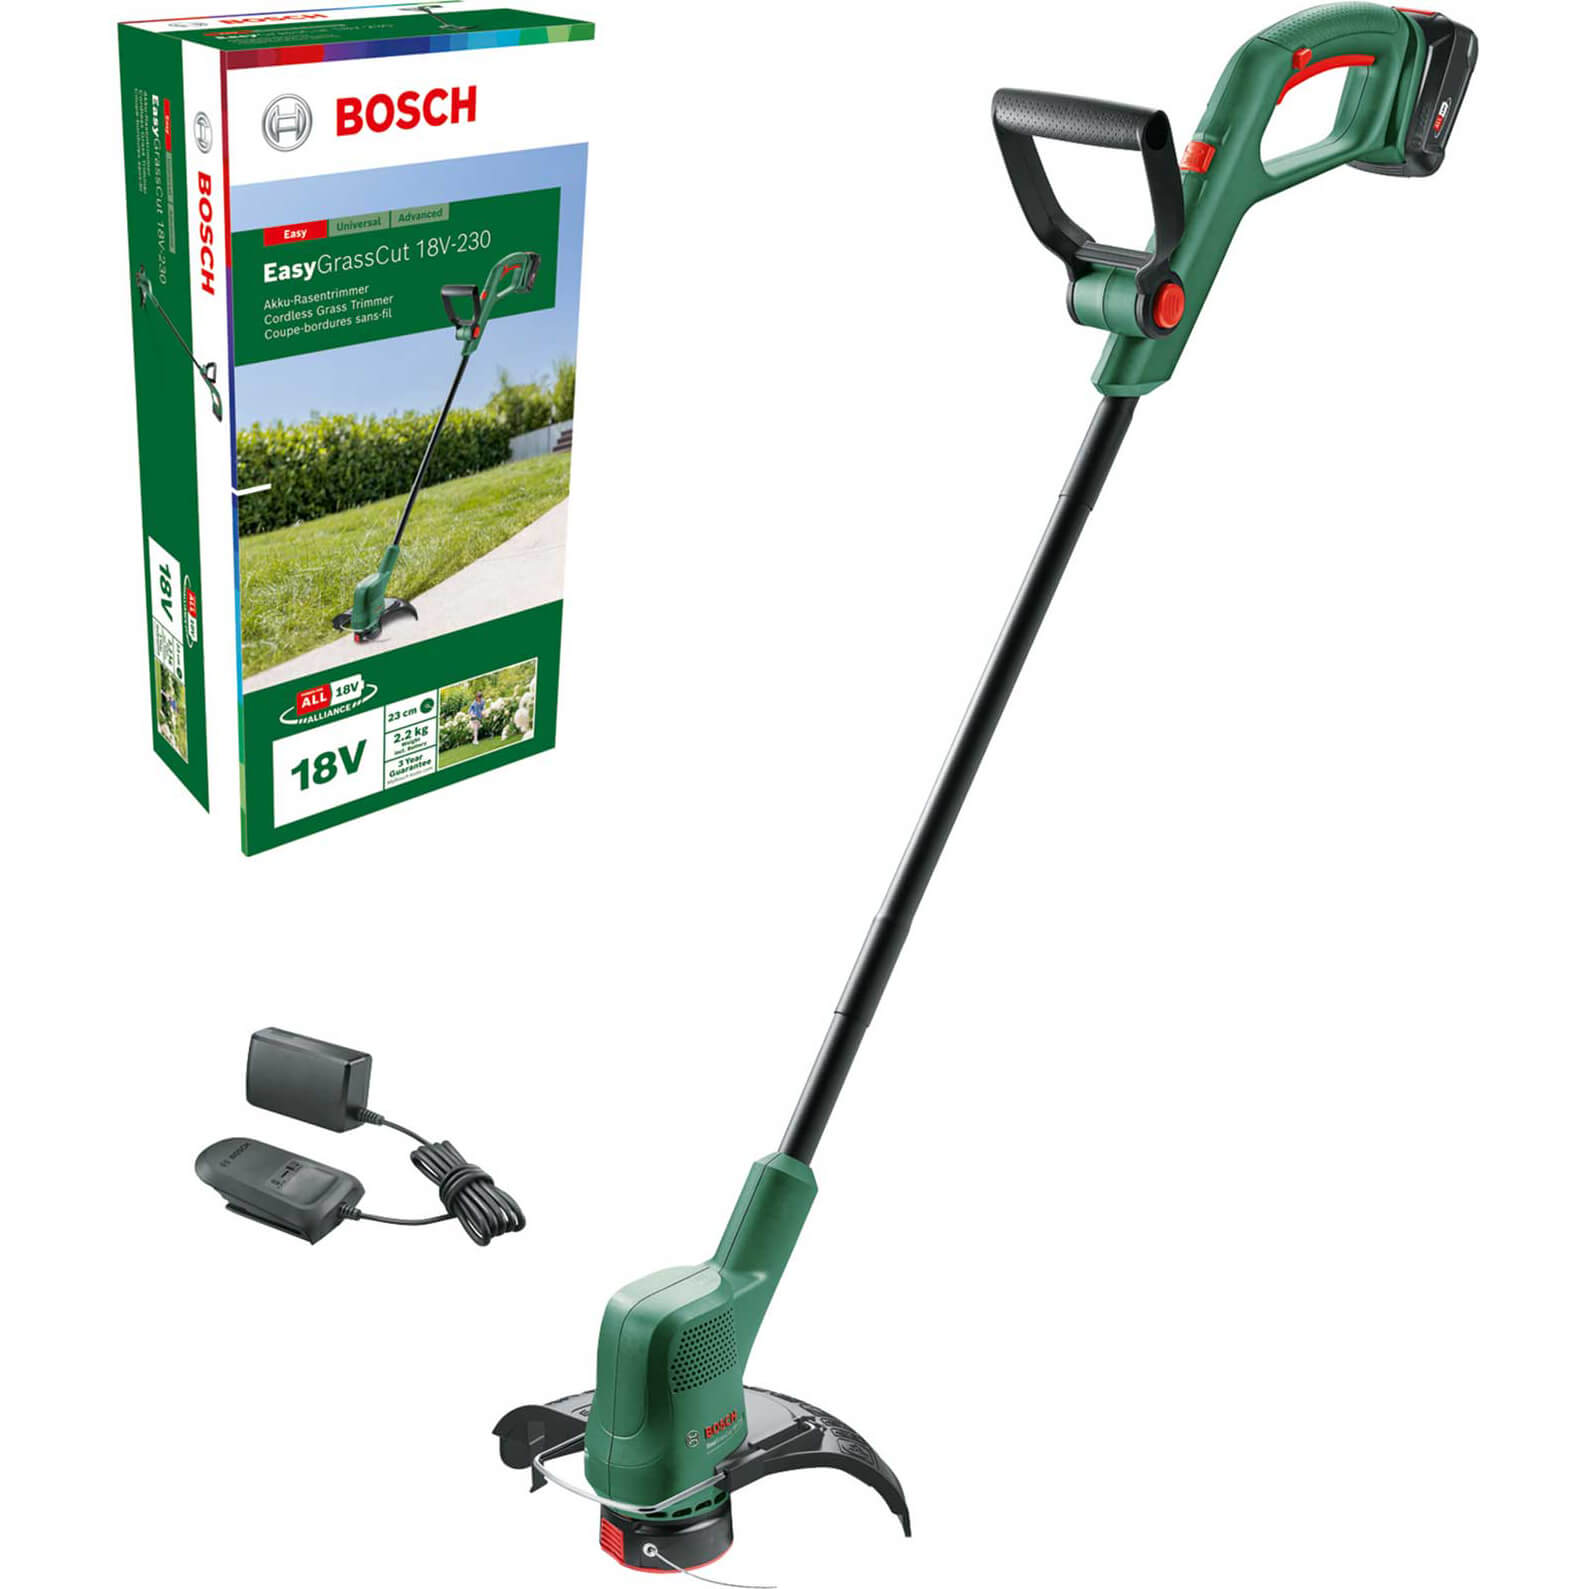 Bosch EASYGRASSCUT 18V-230 18v Cordless Grass Trimmer and Edger 230mm 1 x 2ah Li-ion Charger